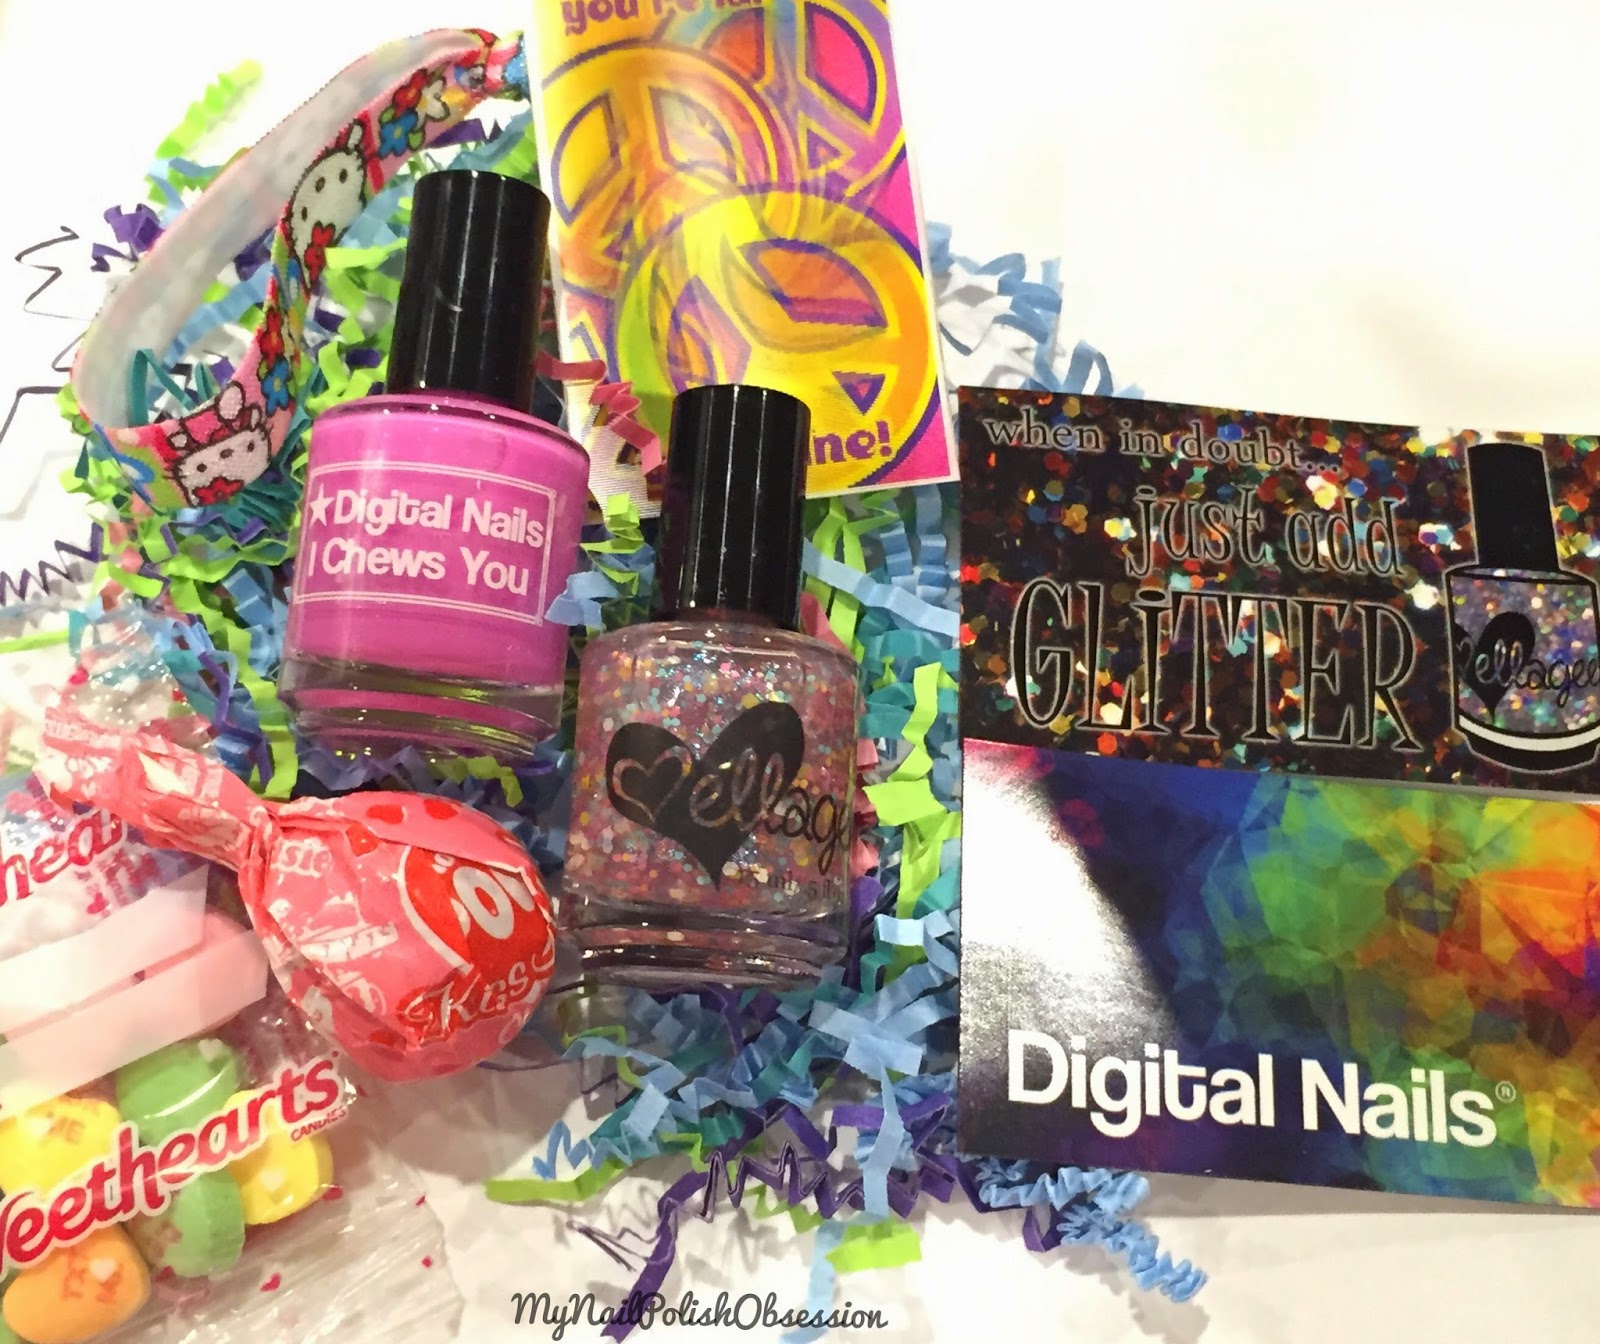 ellagee & Digital Nails Half Price Candy Day Duo: I Chews You & Secret Sugar Stash